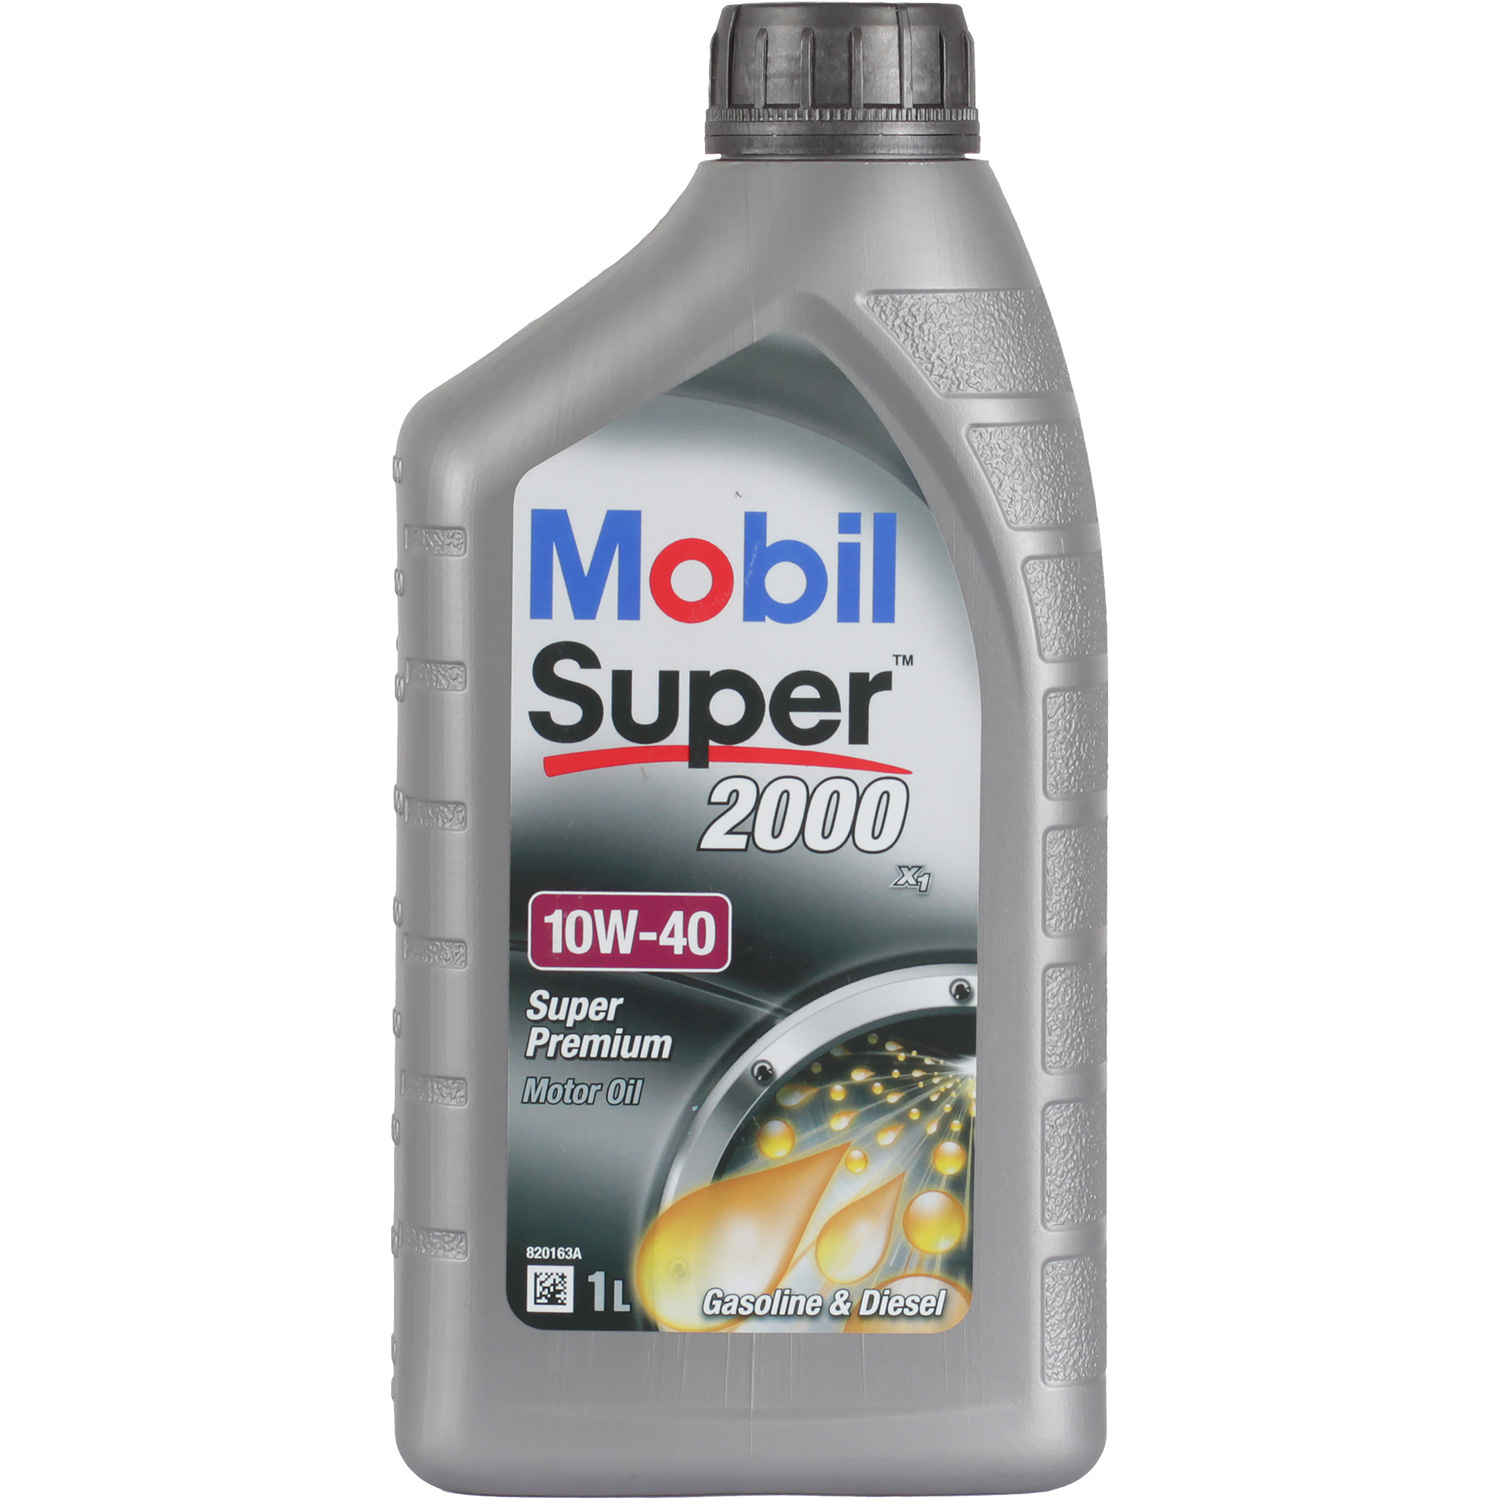 Mobil Моторное масло Mobil Super 2000 X1 10W-40, 1 л моторное масло mobil super 3000 x1 formula fe 5w30 1 л